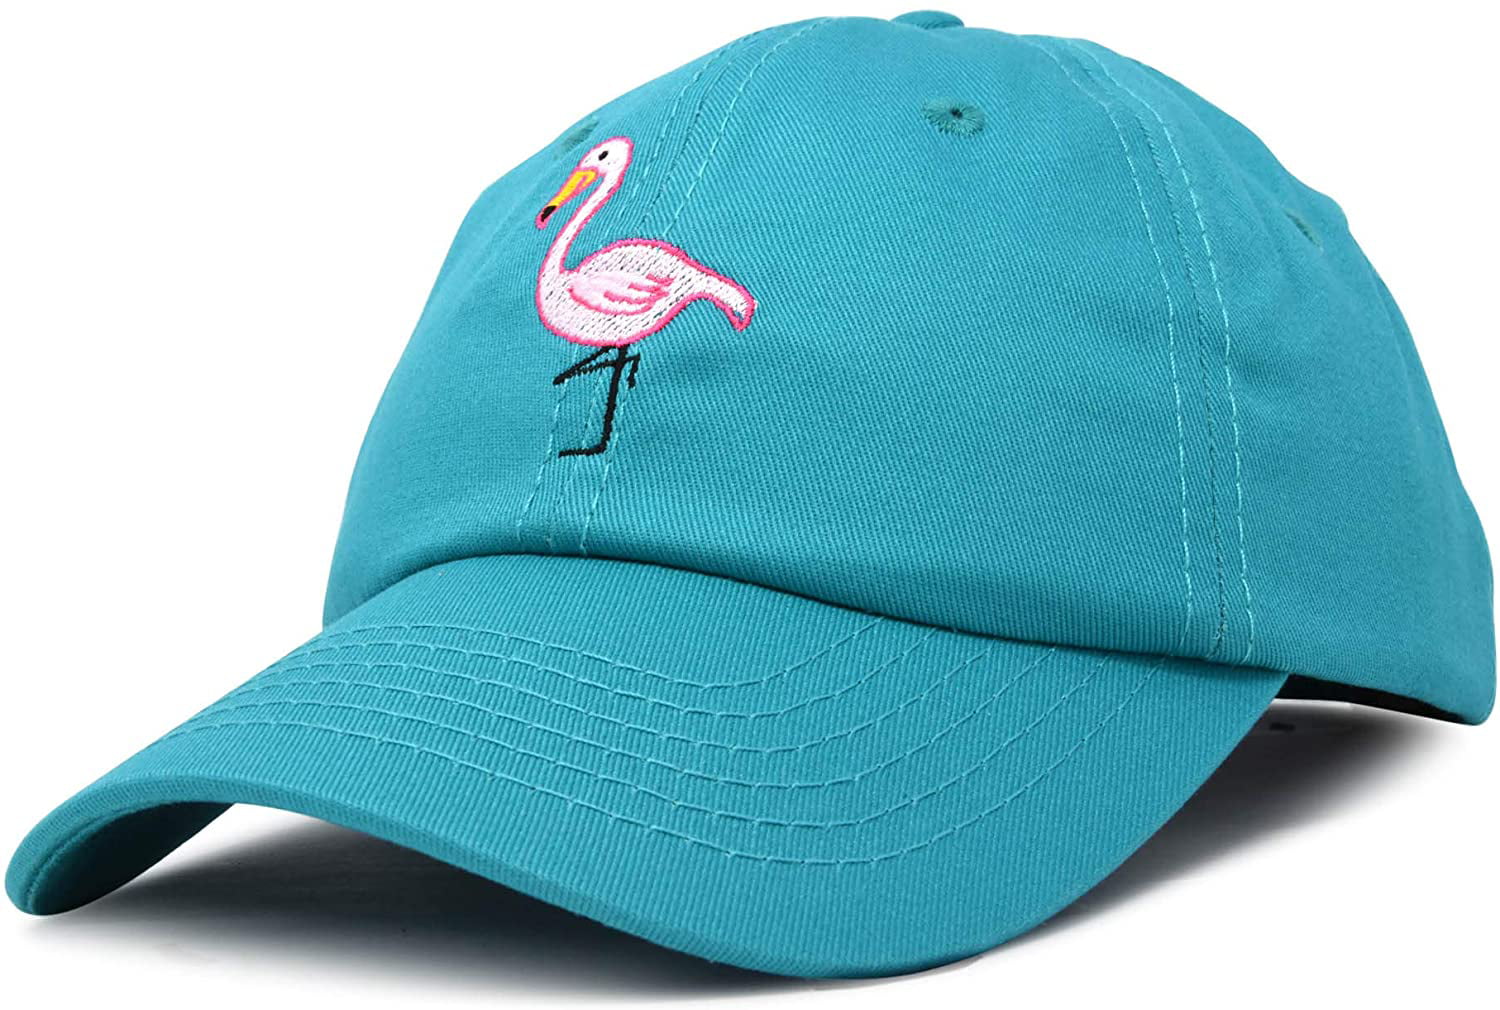 Baseball Cap Elephants Balls Pattern Adjustable Mesh Unisex Baseball Cap Trucker Hat Fits Men Women Hat 